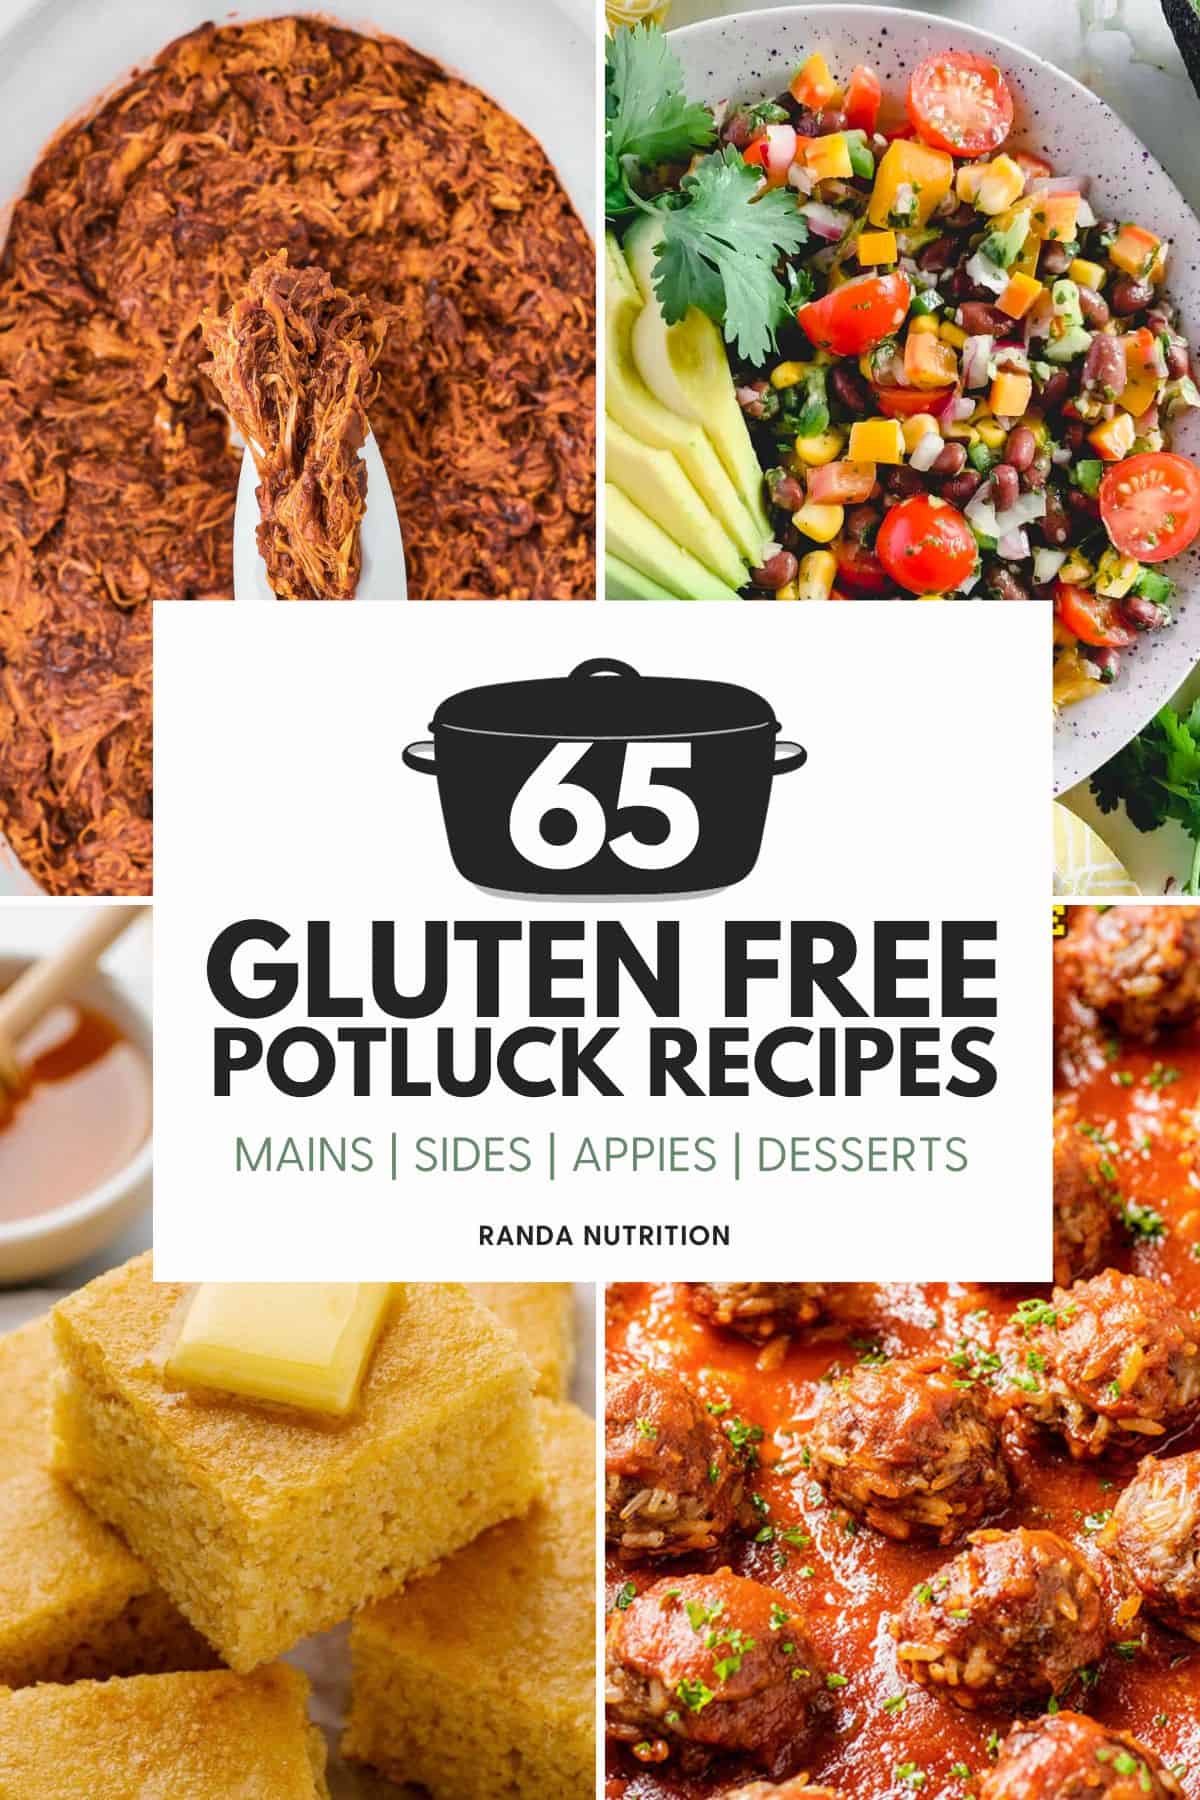 65 Gluten Free Potluck Recipes and Ideas